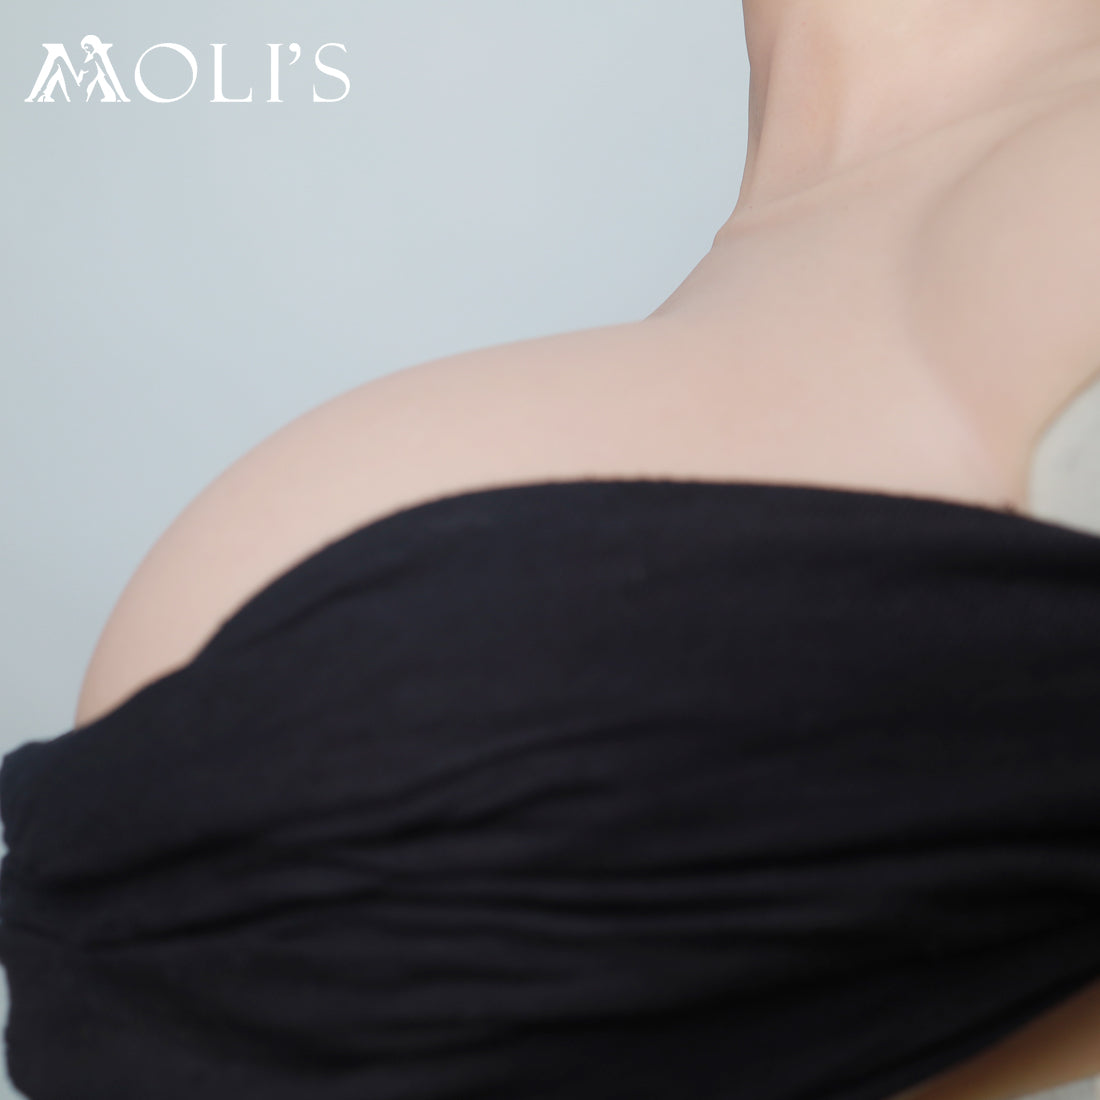 Null Berührung | „X CUP“ Riesentitten-Silikonbrustplatte zur Brustvergrößerung 